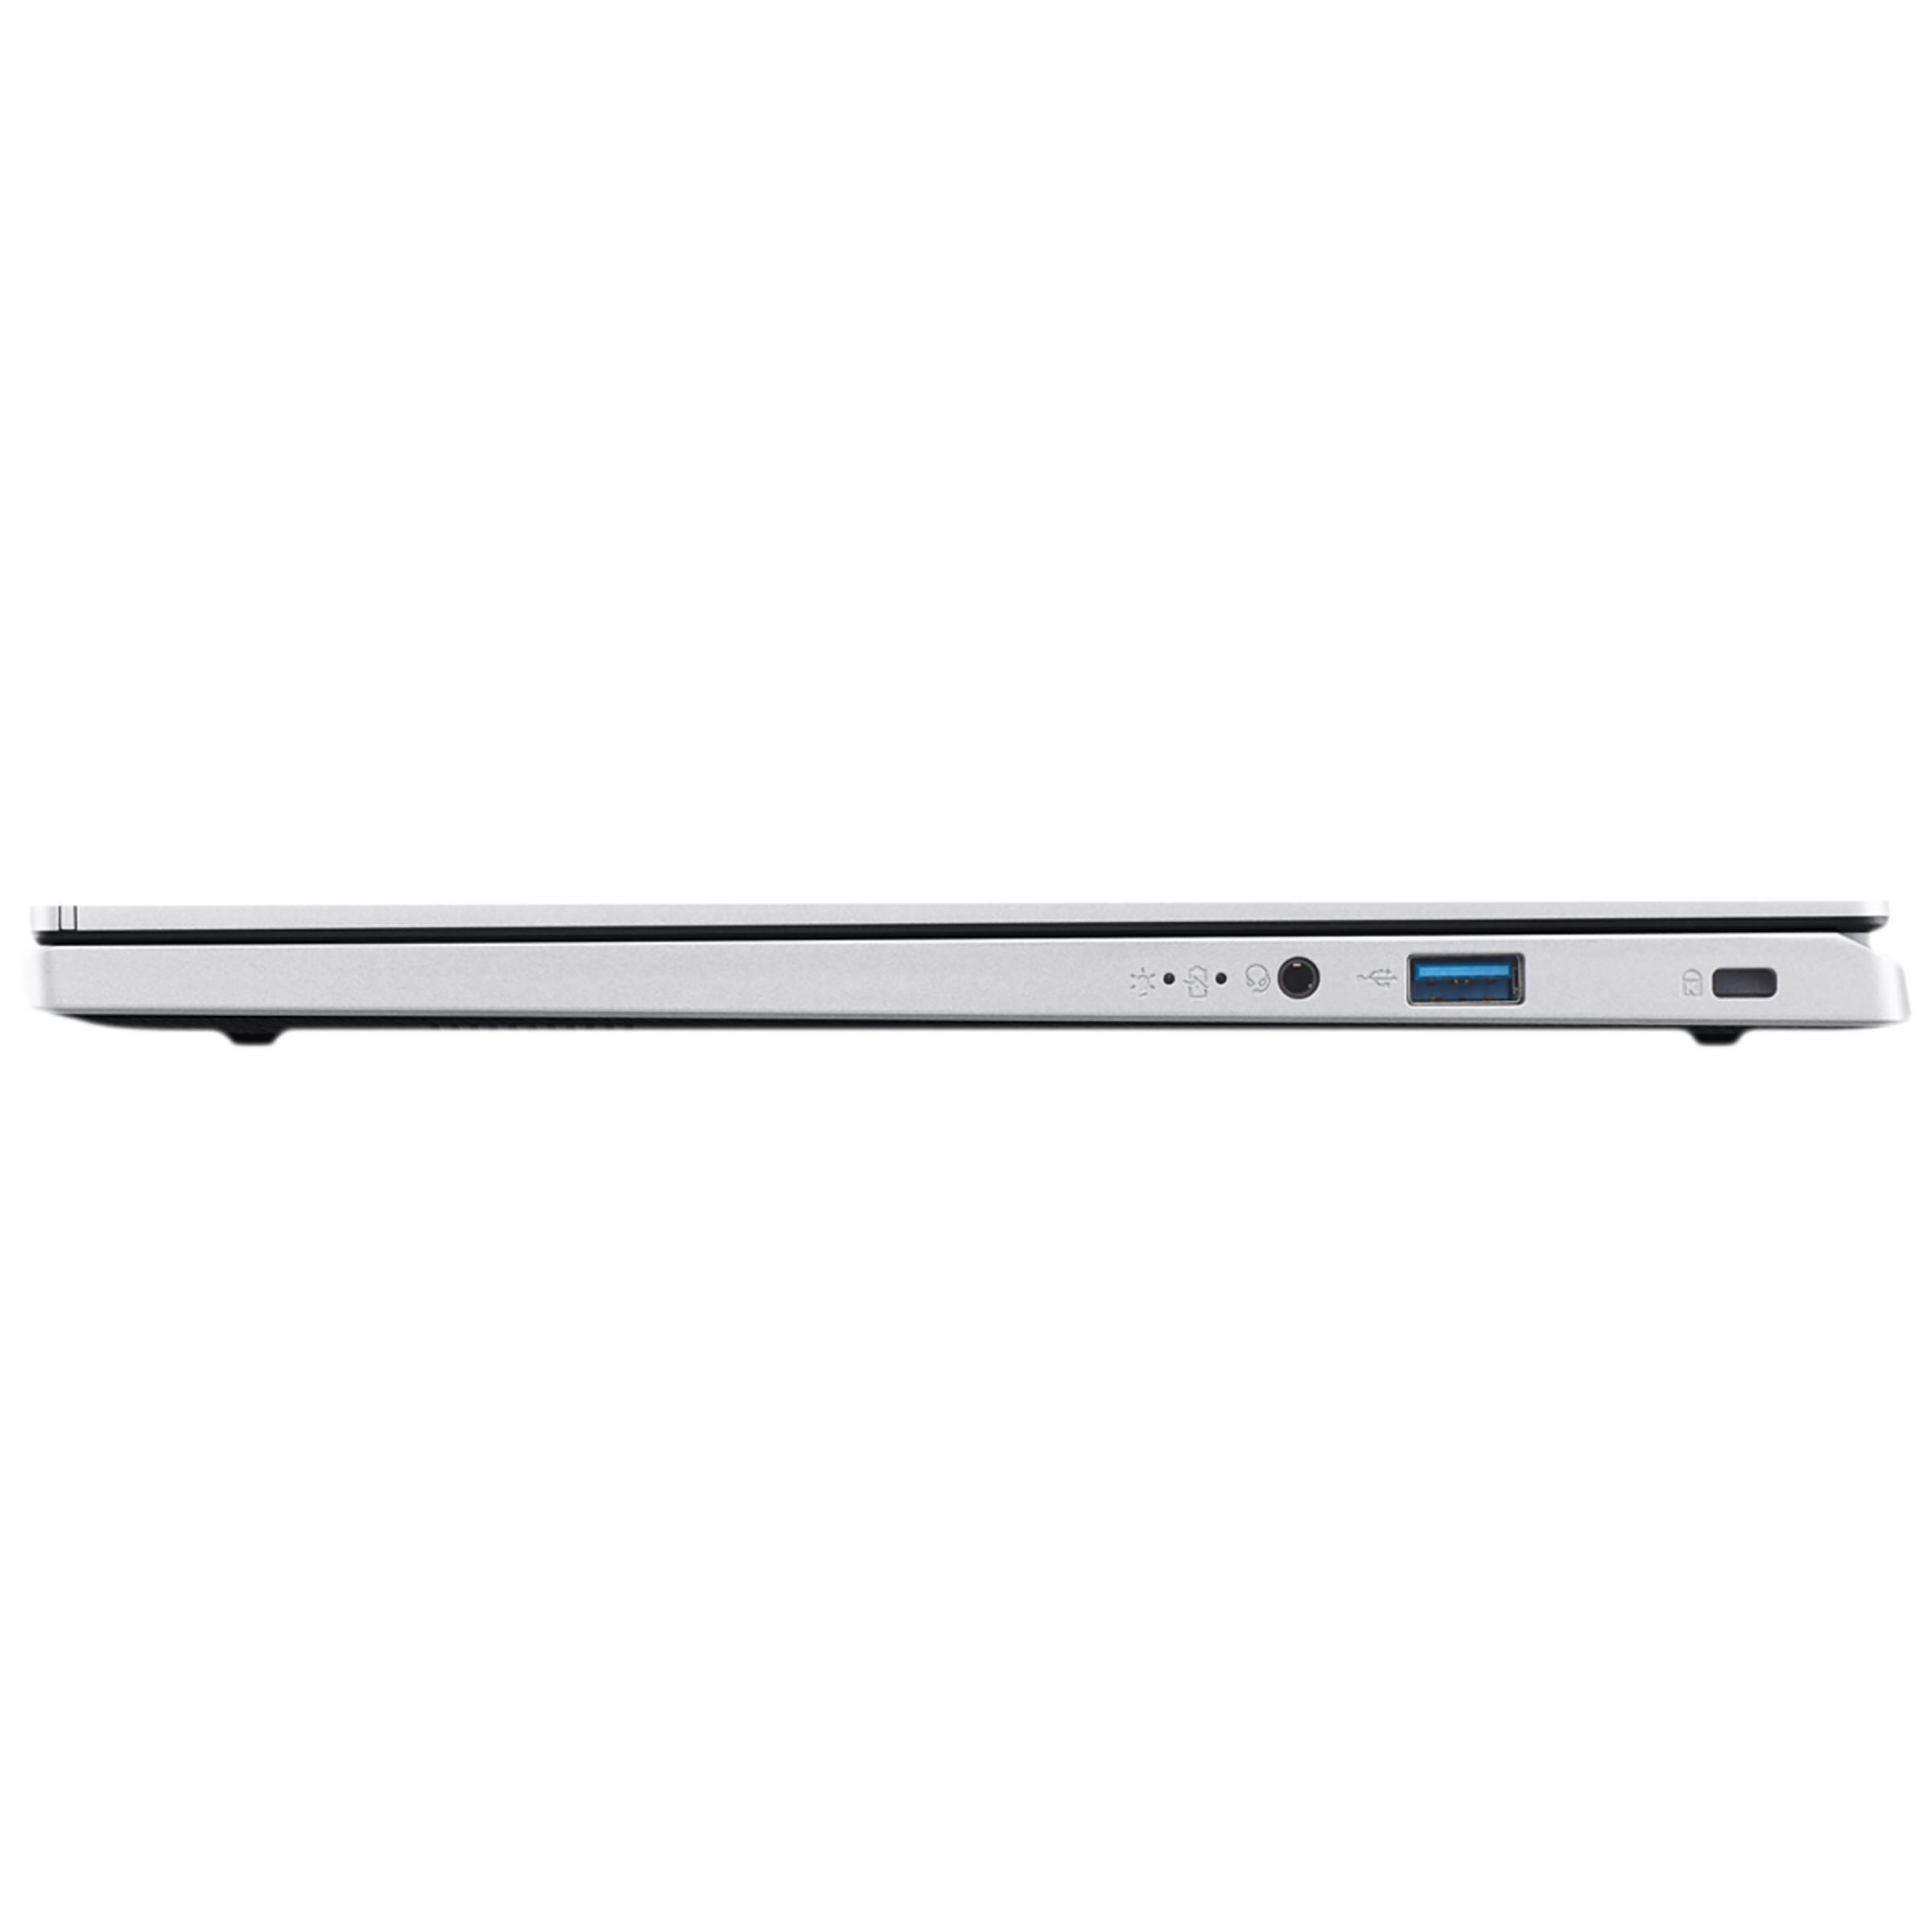 Acer Aspire 3 - Ryzen 5 Quad Core 7520U, 15.6 A315-24P Thin & Light Laptop  (8GB / 512GB SSD Full HD Display / Windows 11 Home / MS Office / 1 Year  Warranty / Pure Silver / 1.78 Kg)